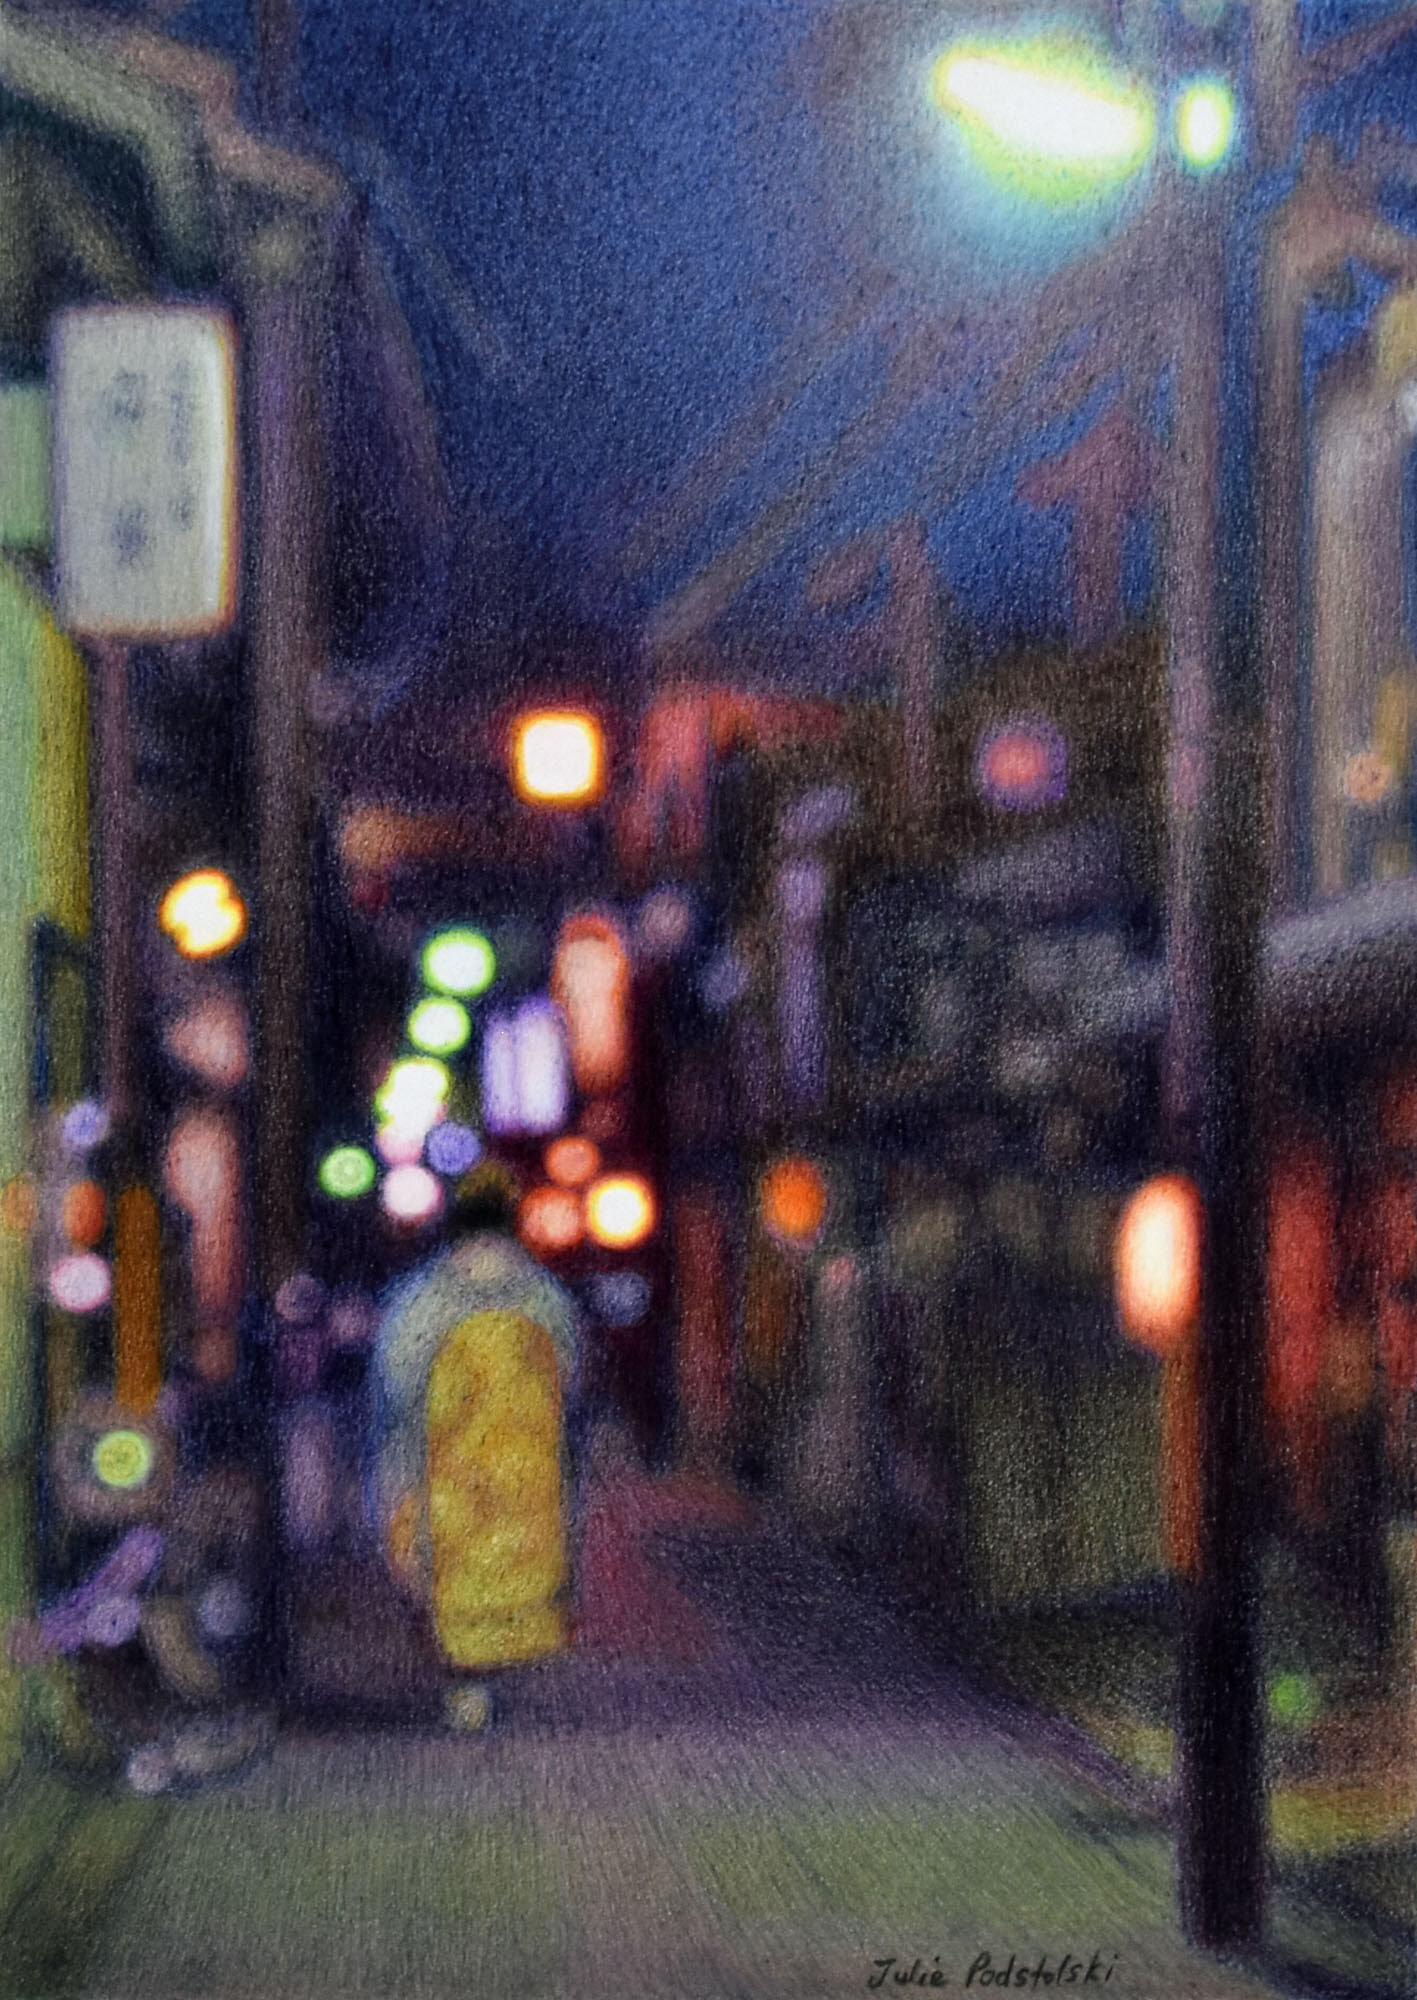 Last Night I Dreamed of Kyoto - drawing by Julie Podstolski